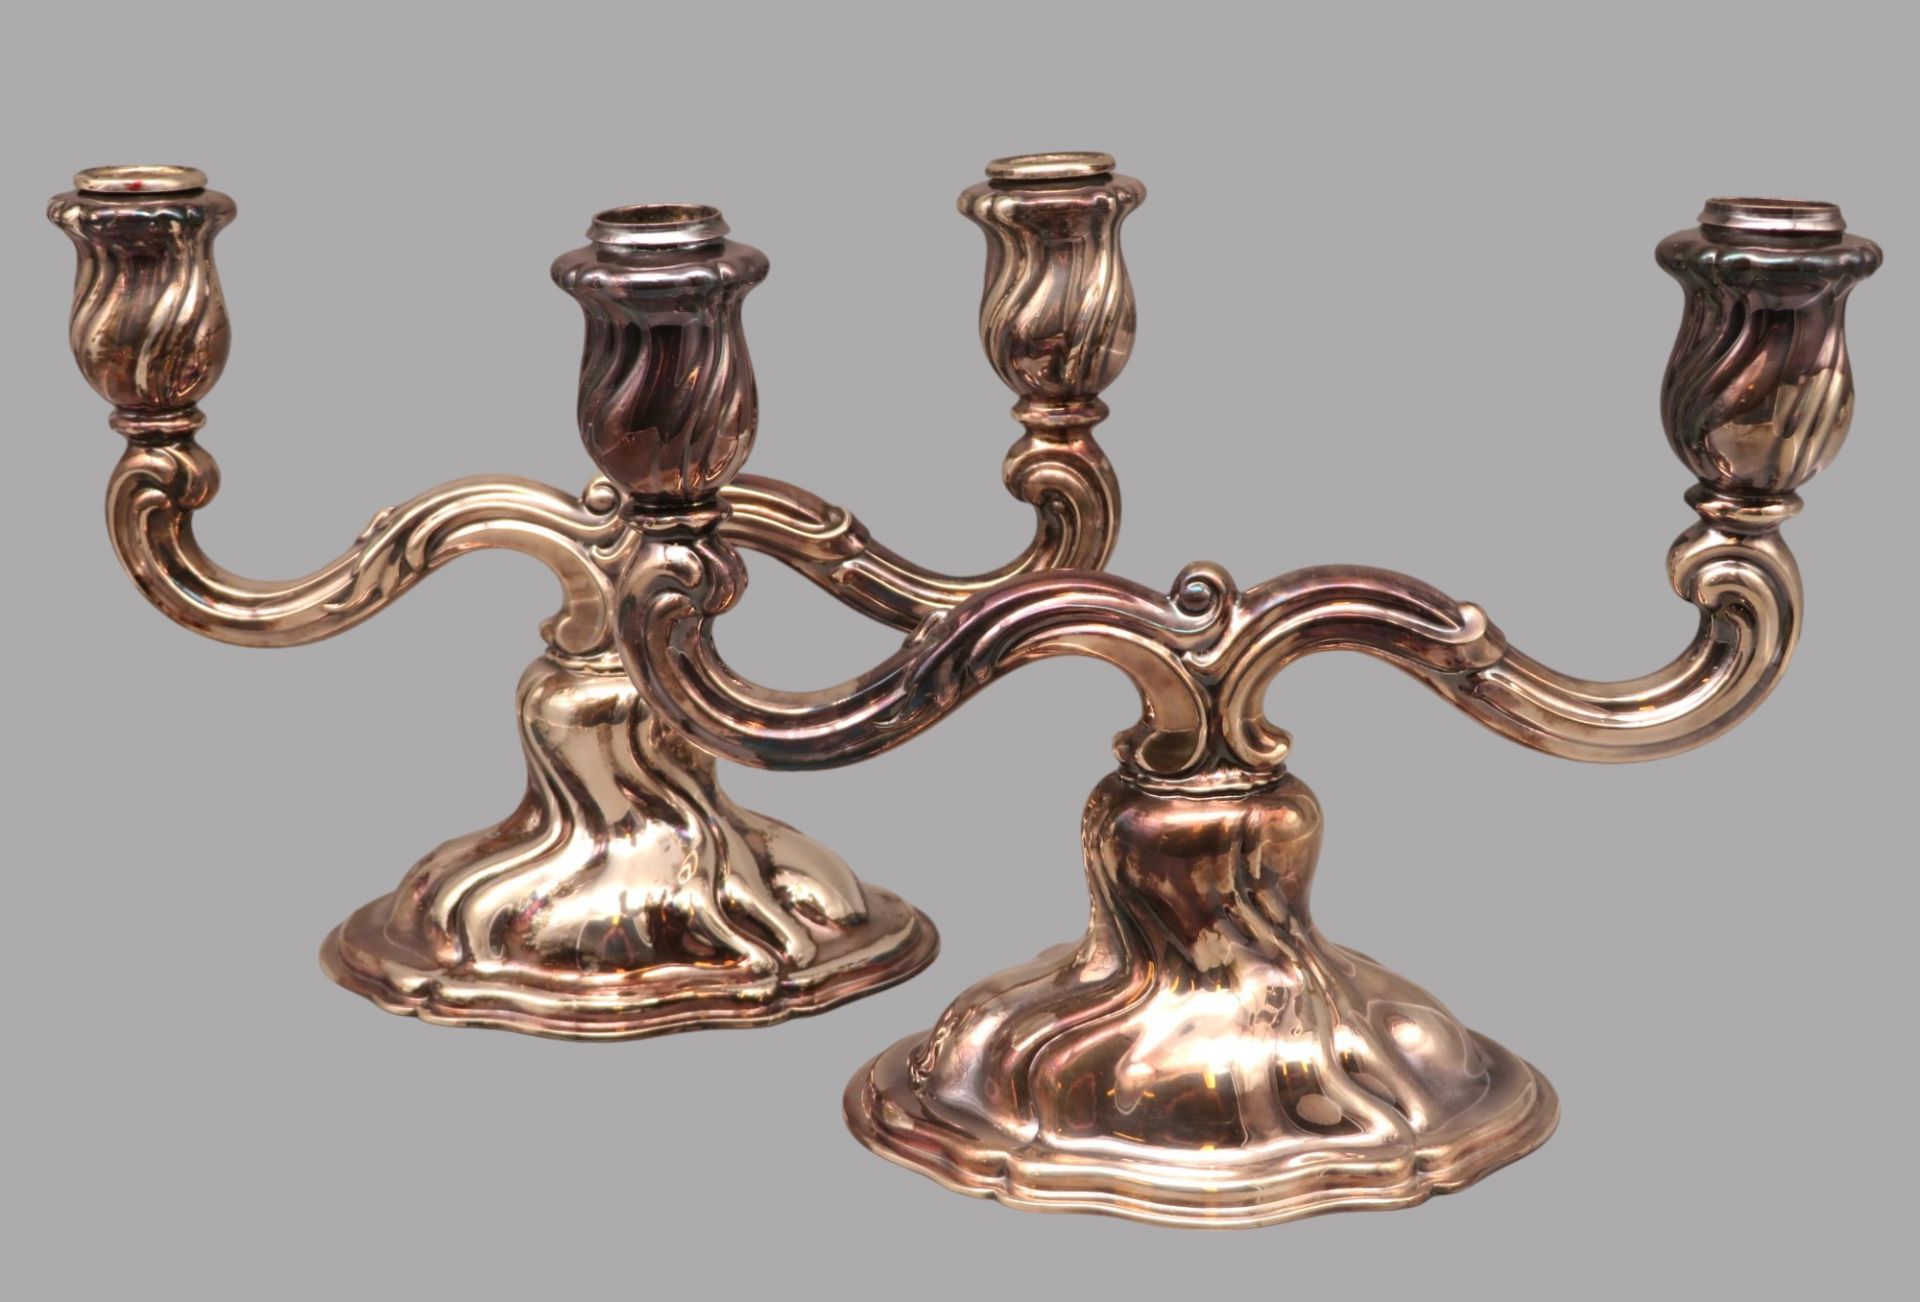 2 Kerzenleuchter, Chippendale-Stil, je 2-flammig, Silber 925/000, punziert, brutto 1246 g, Bodenpla